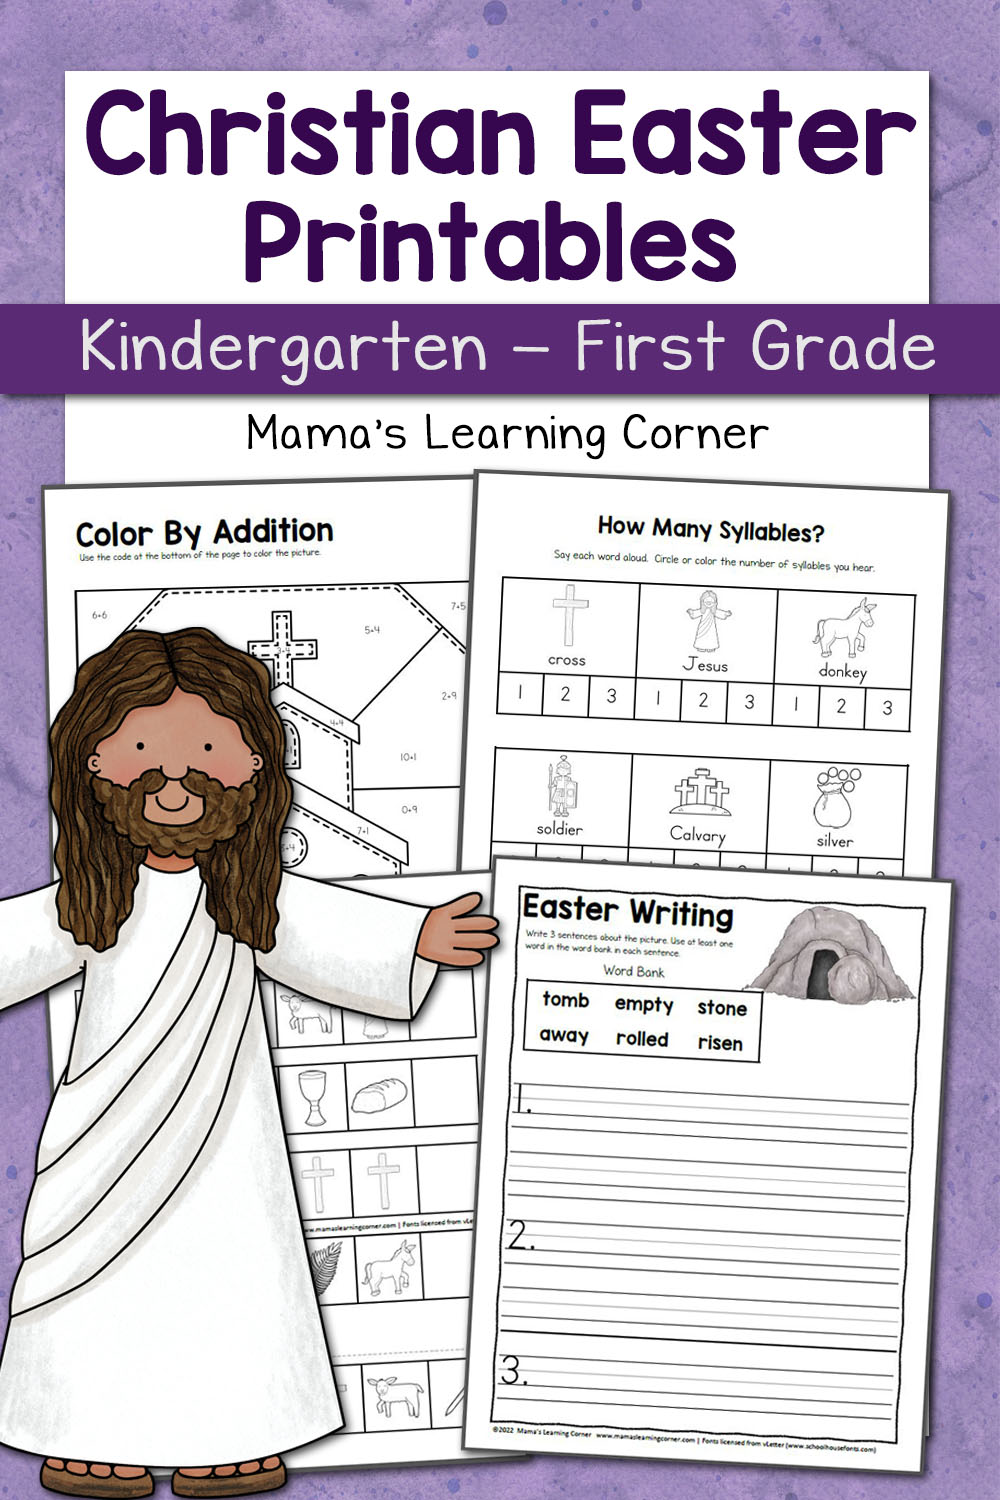 Christian easter worksheets for kindergarten and first grade